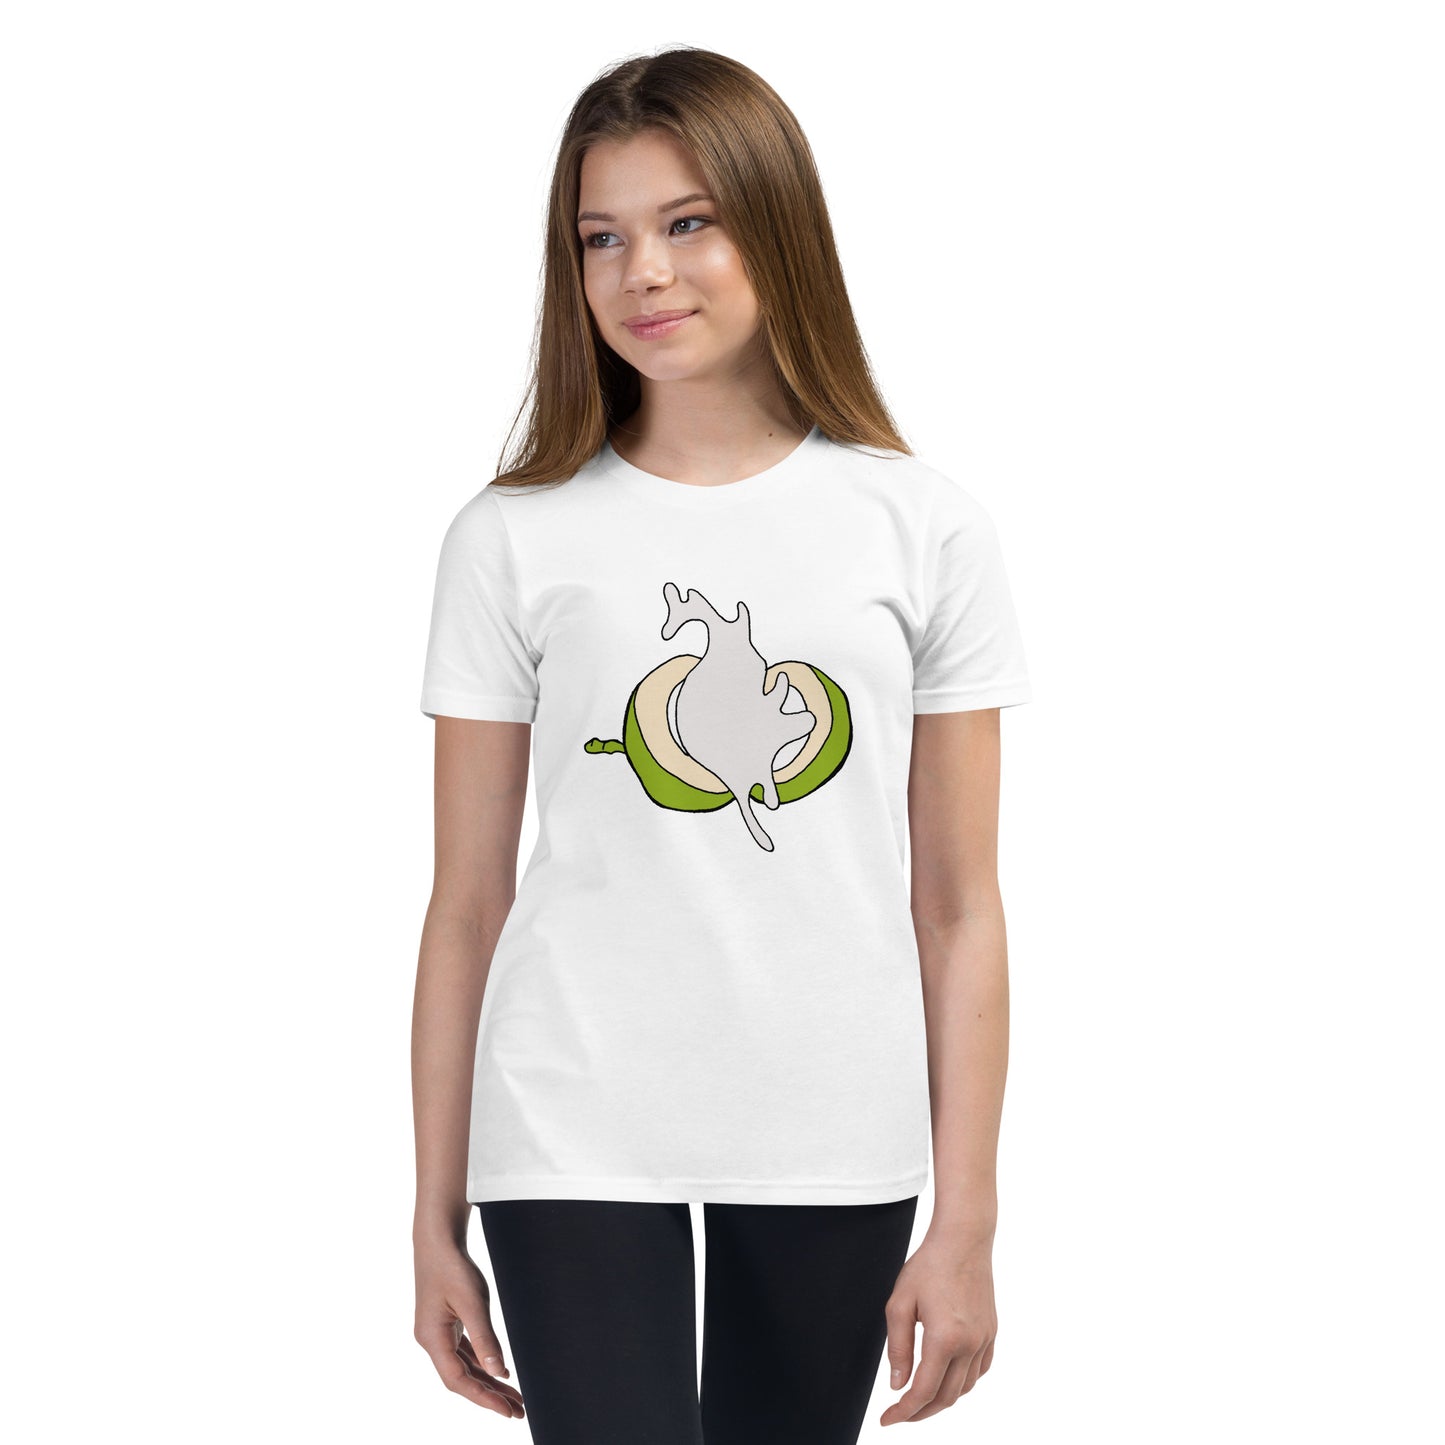 Youth Short Sleeve "Coconut" T-Shirt